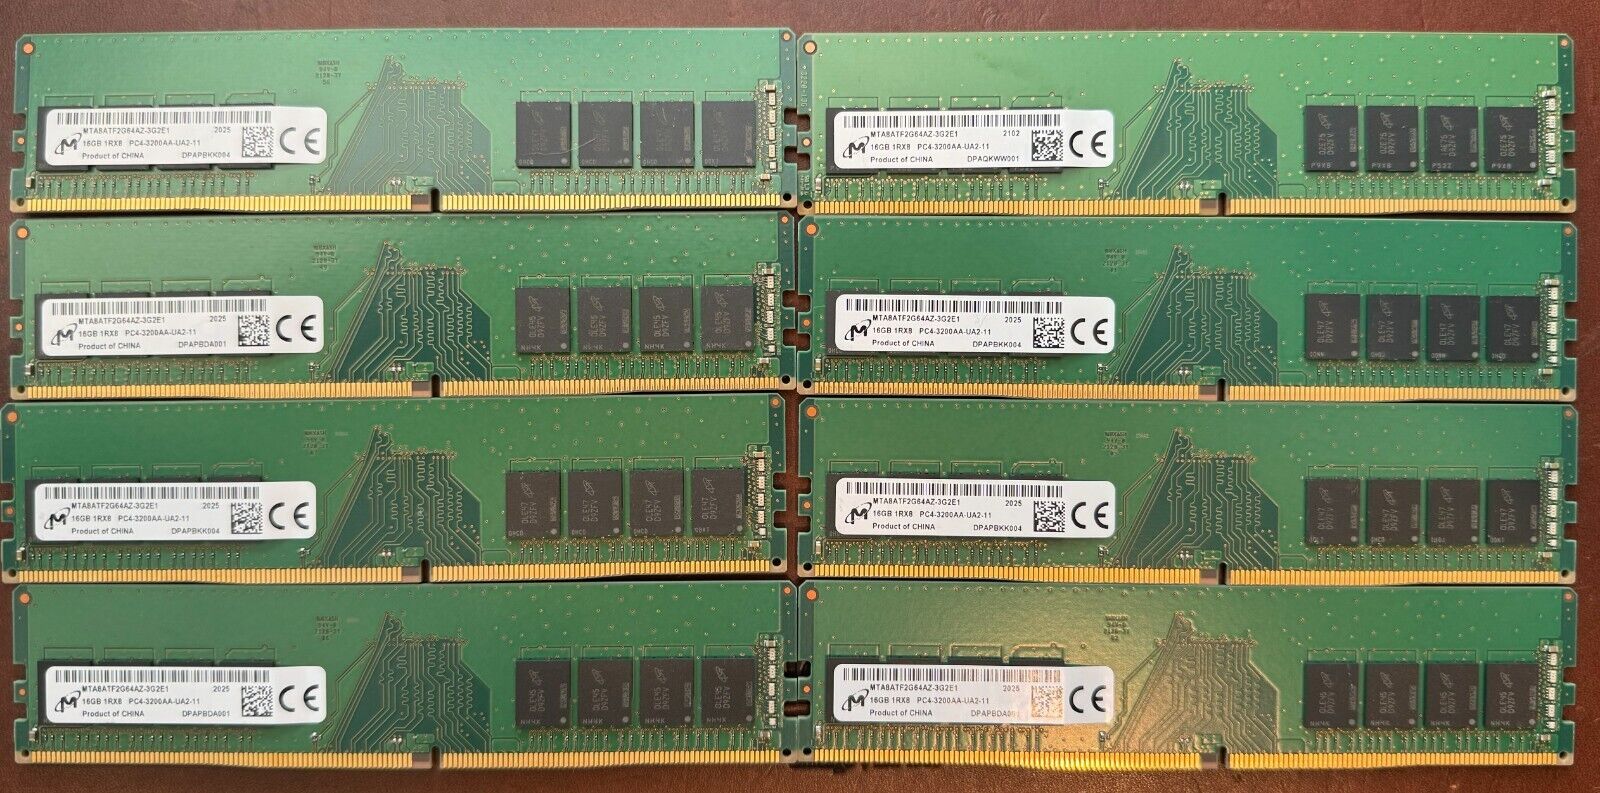 Micron 16GB DDR4 PC4-3200 RAM modules mtabatf2g64az-3g2e1